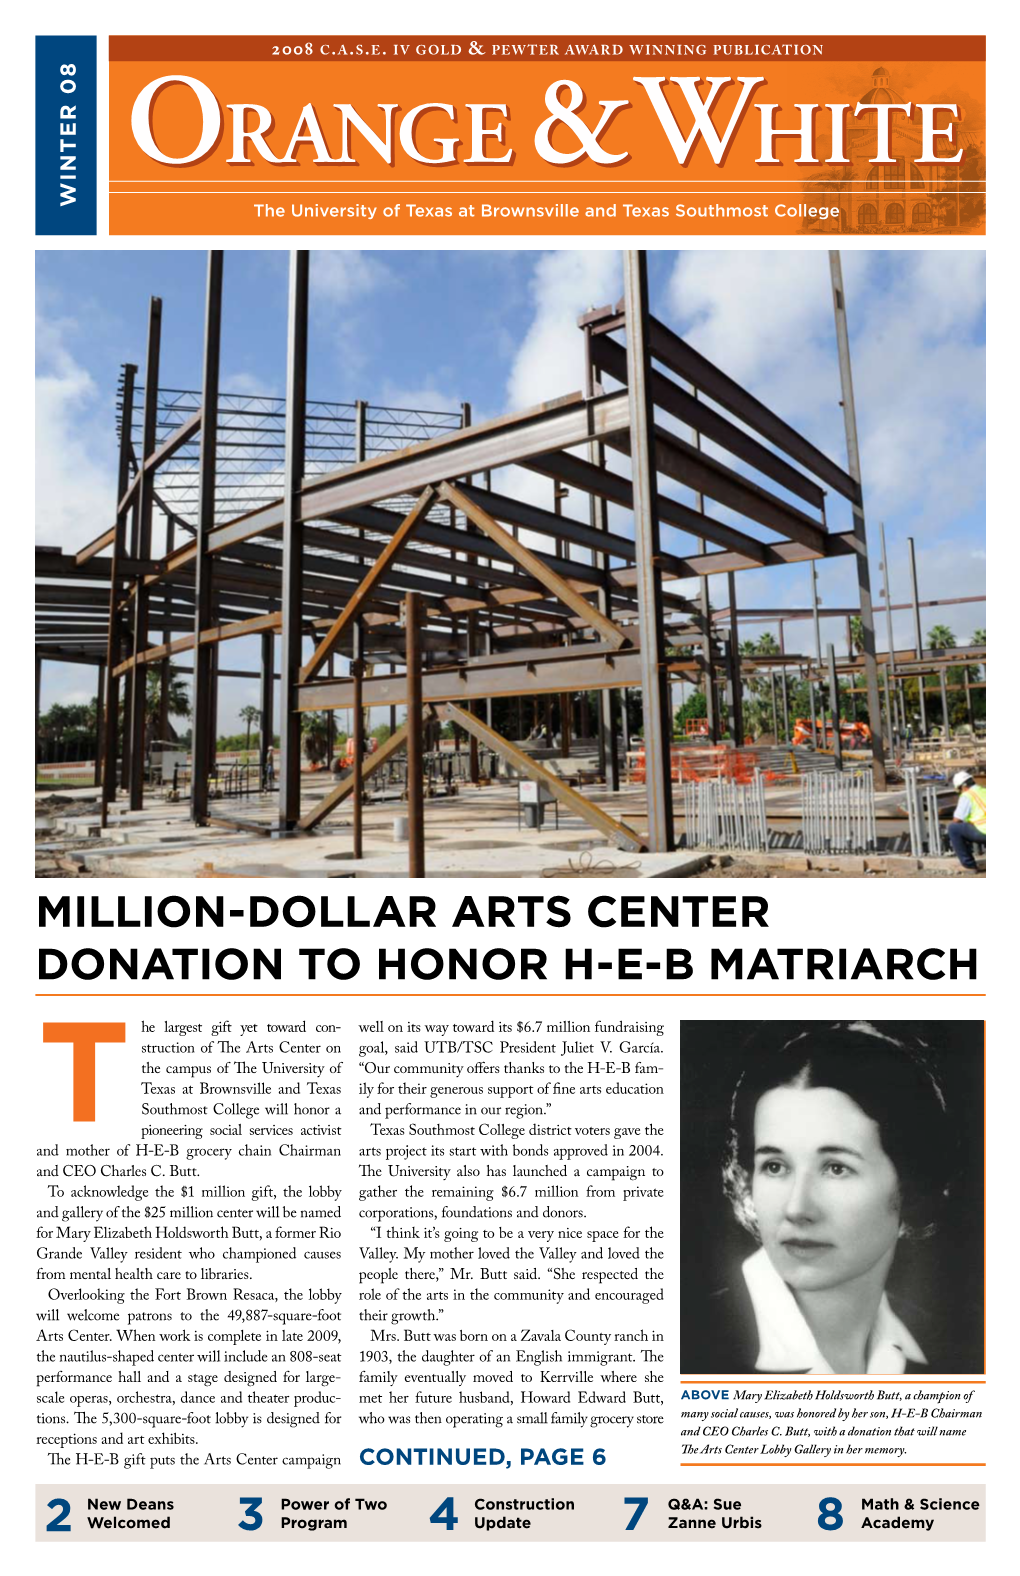 Million-Dollar Arts Center Donation to Honor H-E-B Matriarch